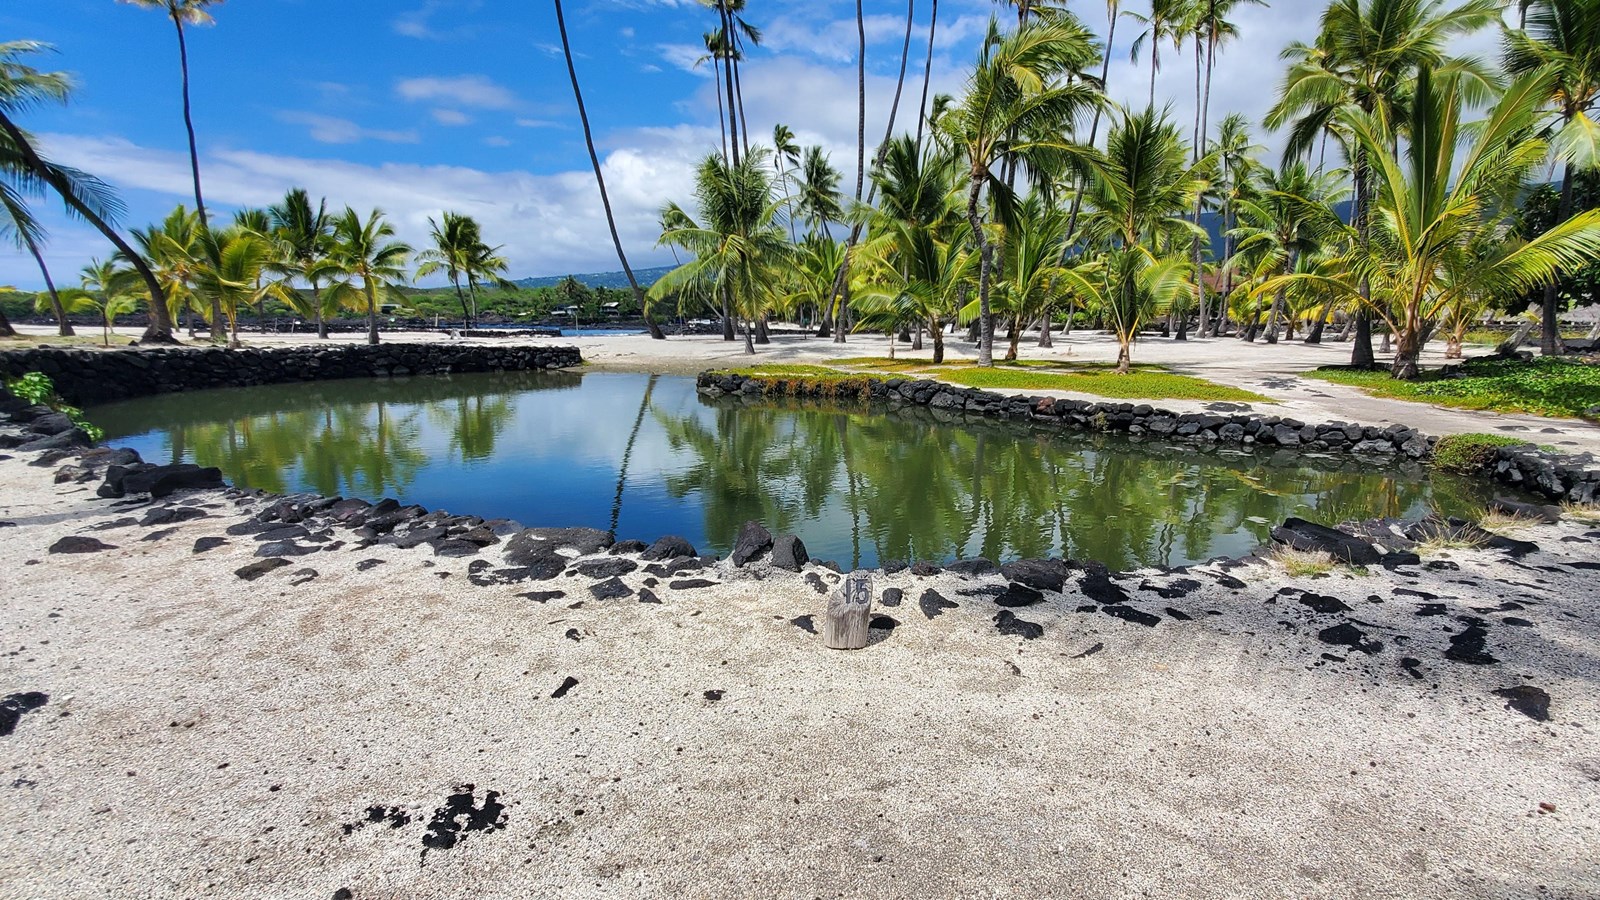 Ancient Hawaiian Fishponds: a Sustainable Way to Farm Fish